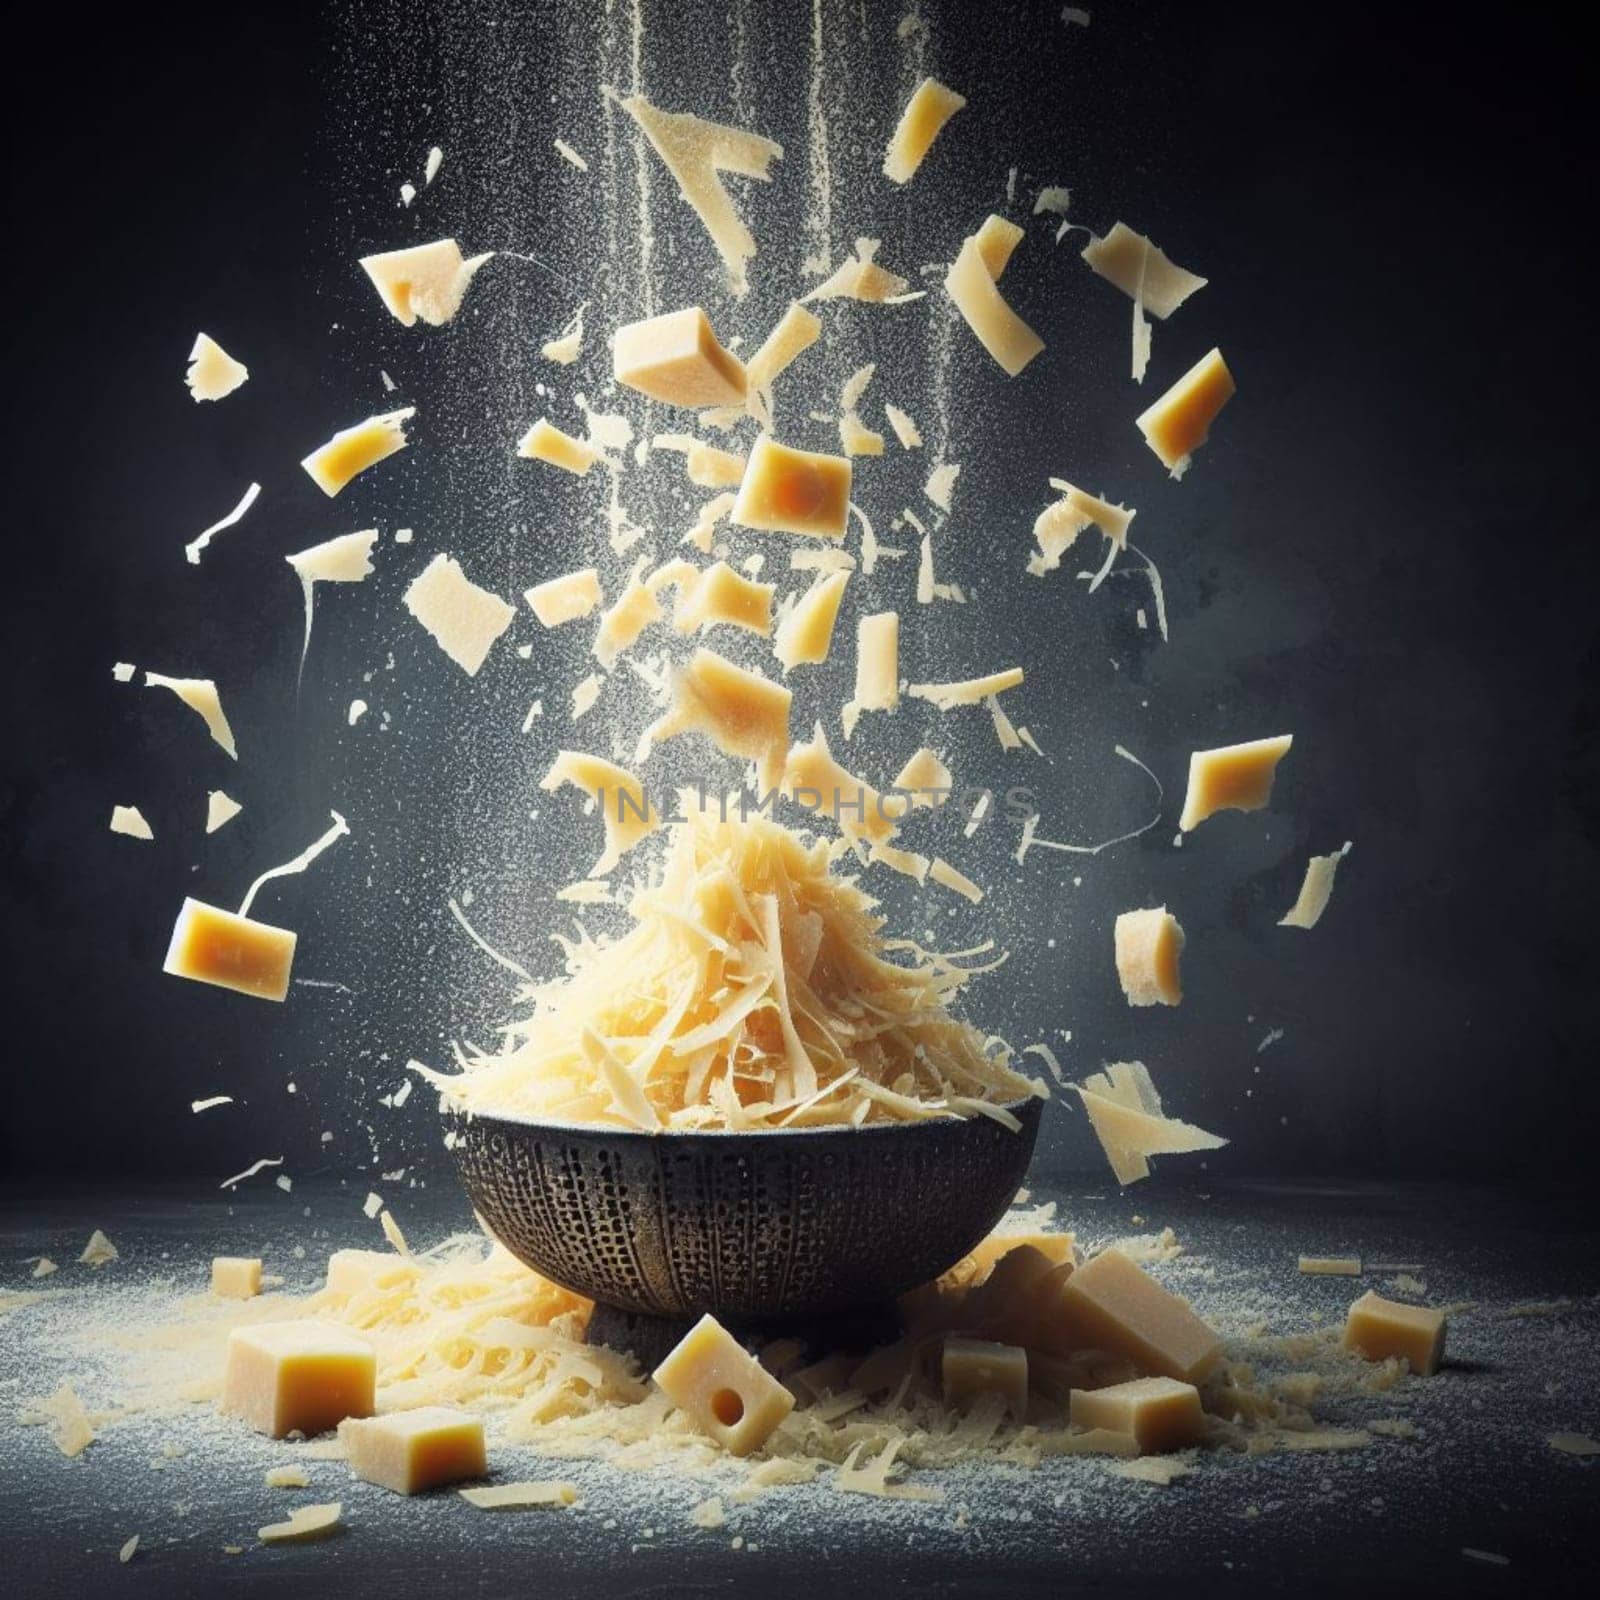 person grating parmigiano regiano parmesan cheese on dark background illustration by verbano